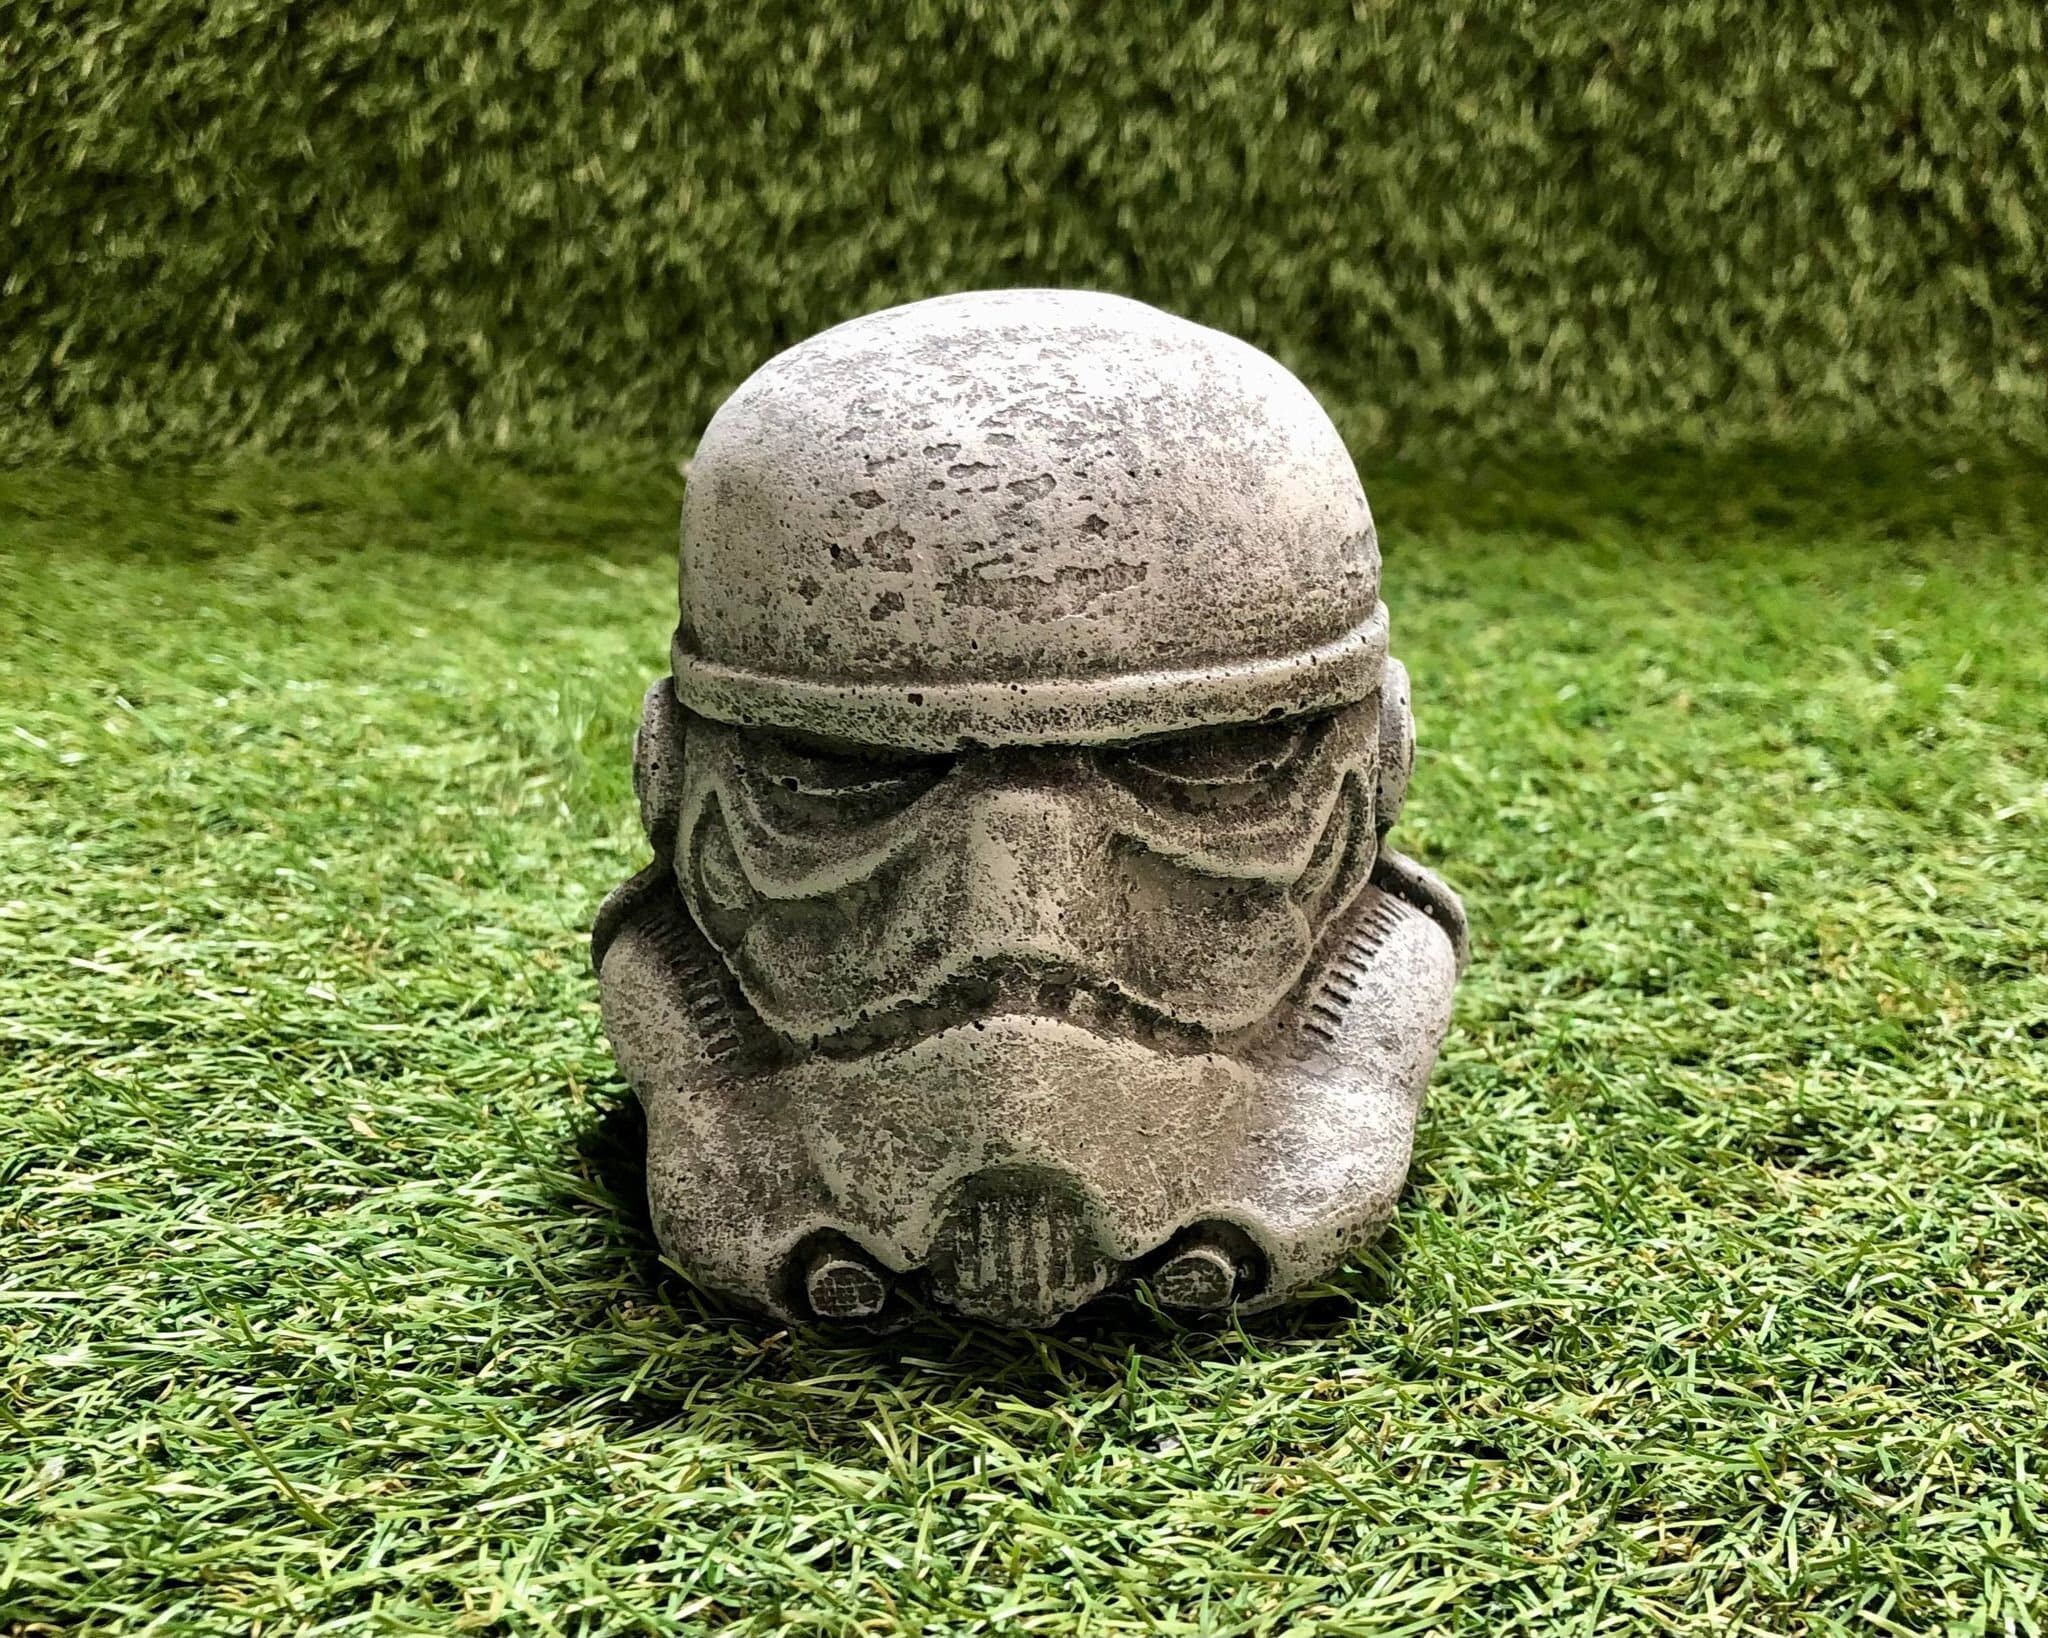 Star Wars AT-AT Lawn Ornament